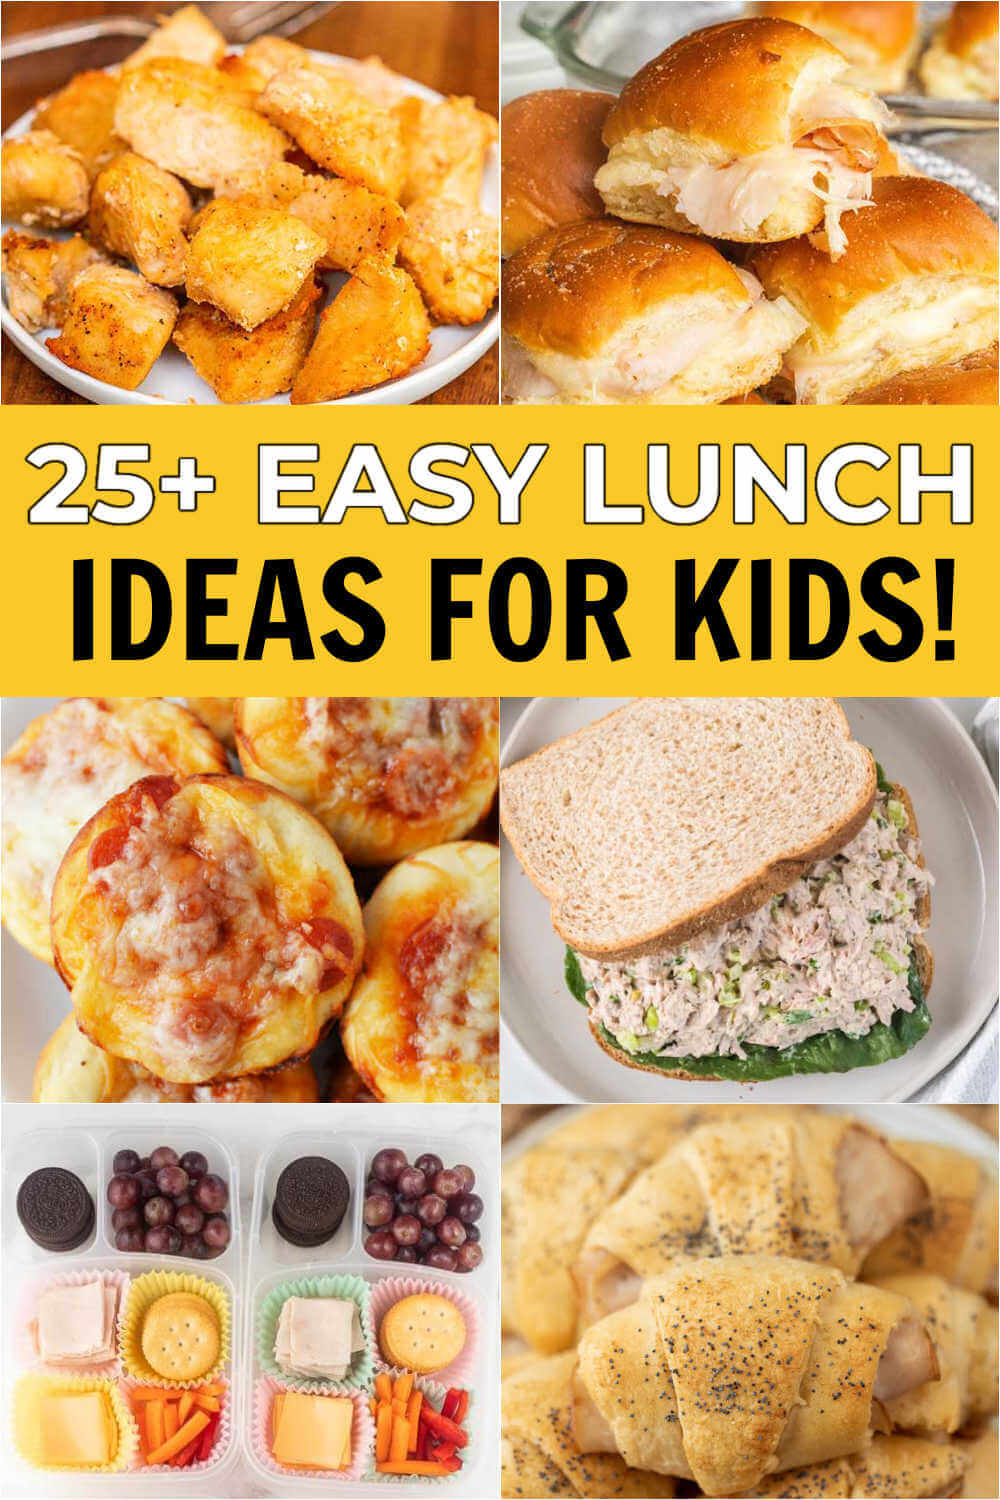 Easy lunch ideas for kids - easy tasty lunch ideas kids will love